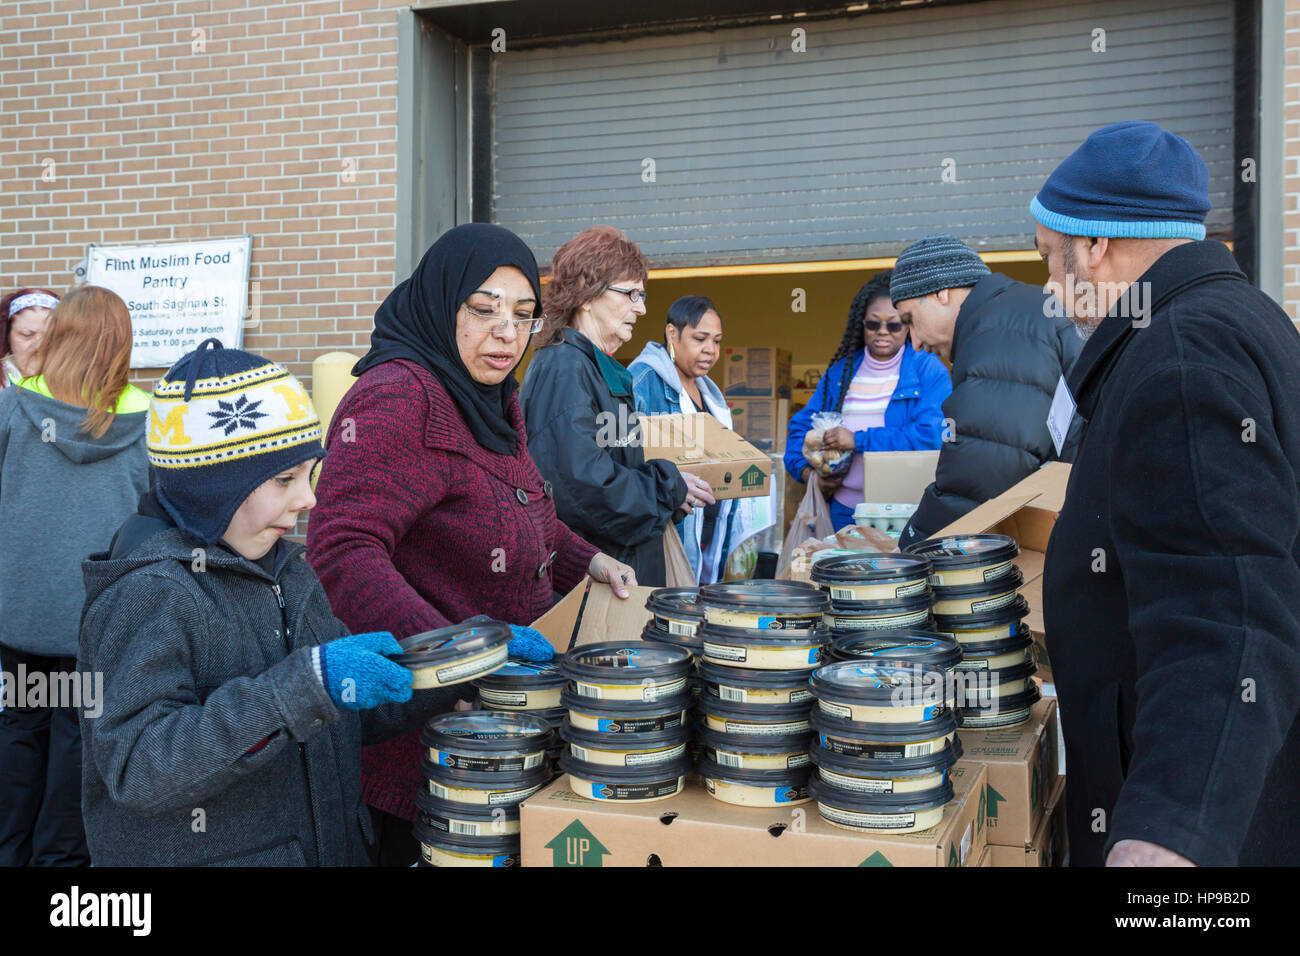 Flint, Michigan - Volunteers prepare food for distribution at the Muslim Food Pantry. Twice a month, members of Flint's Muslim community distribute fr Stock Photo